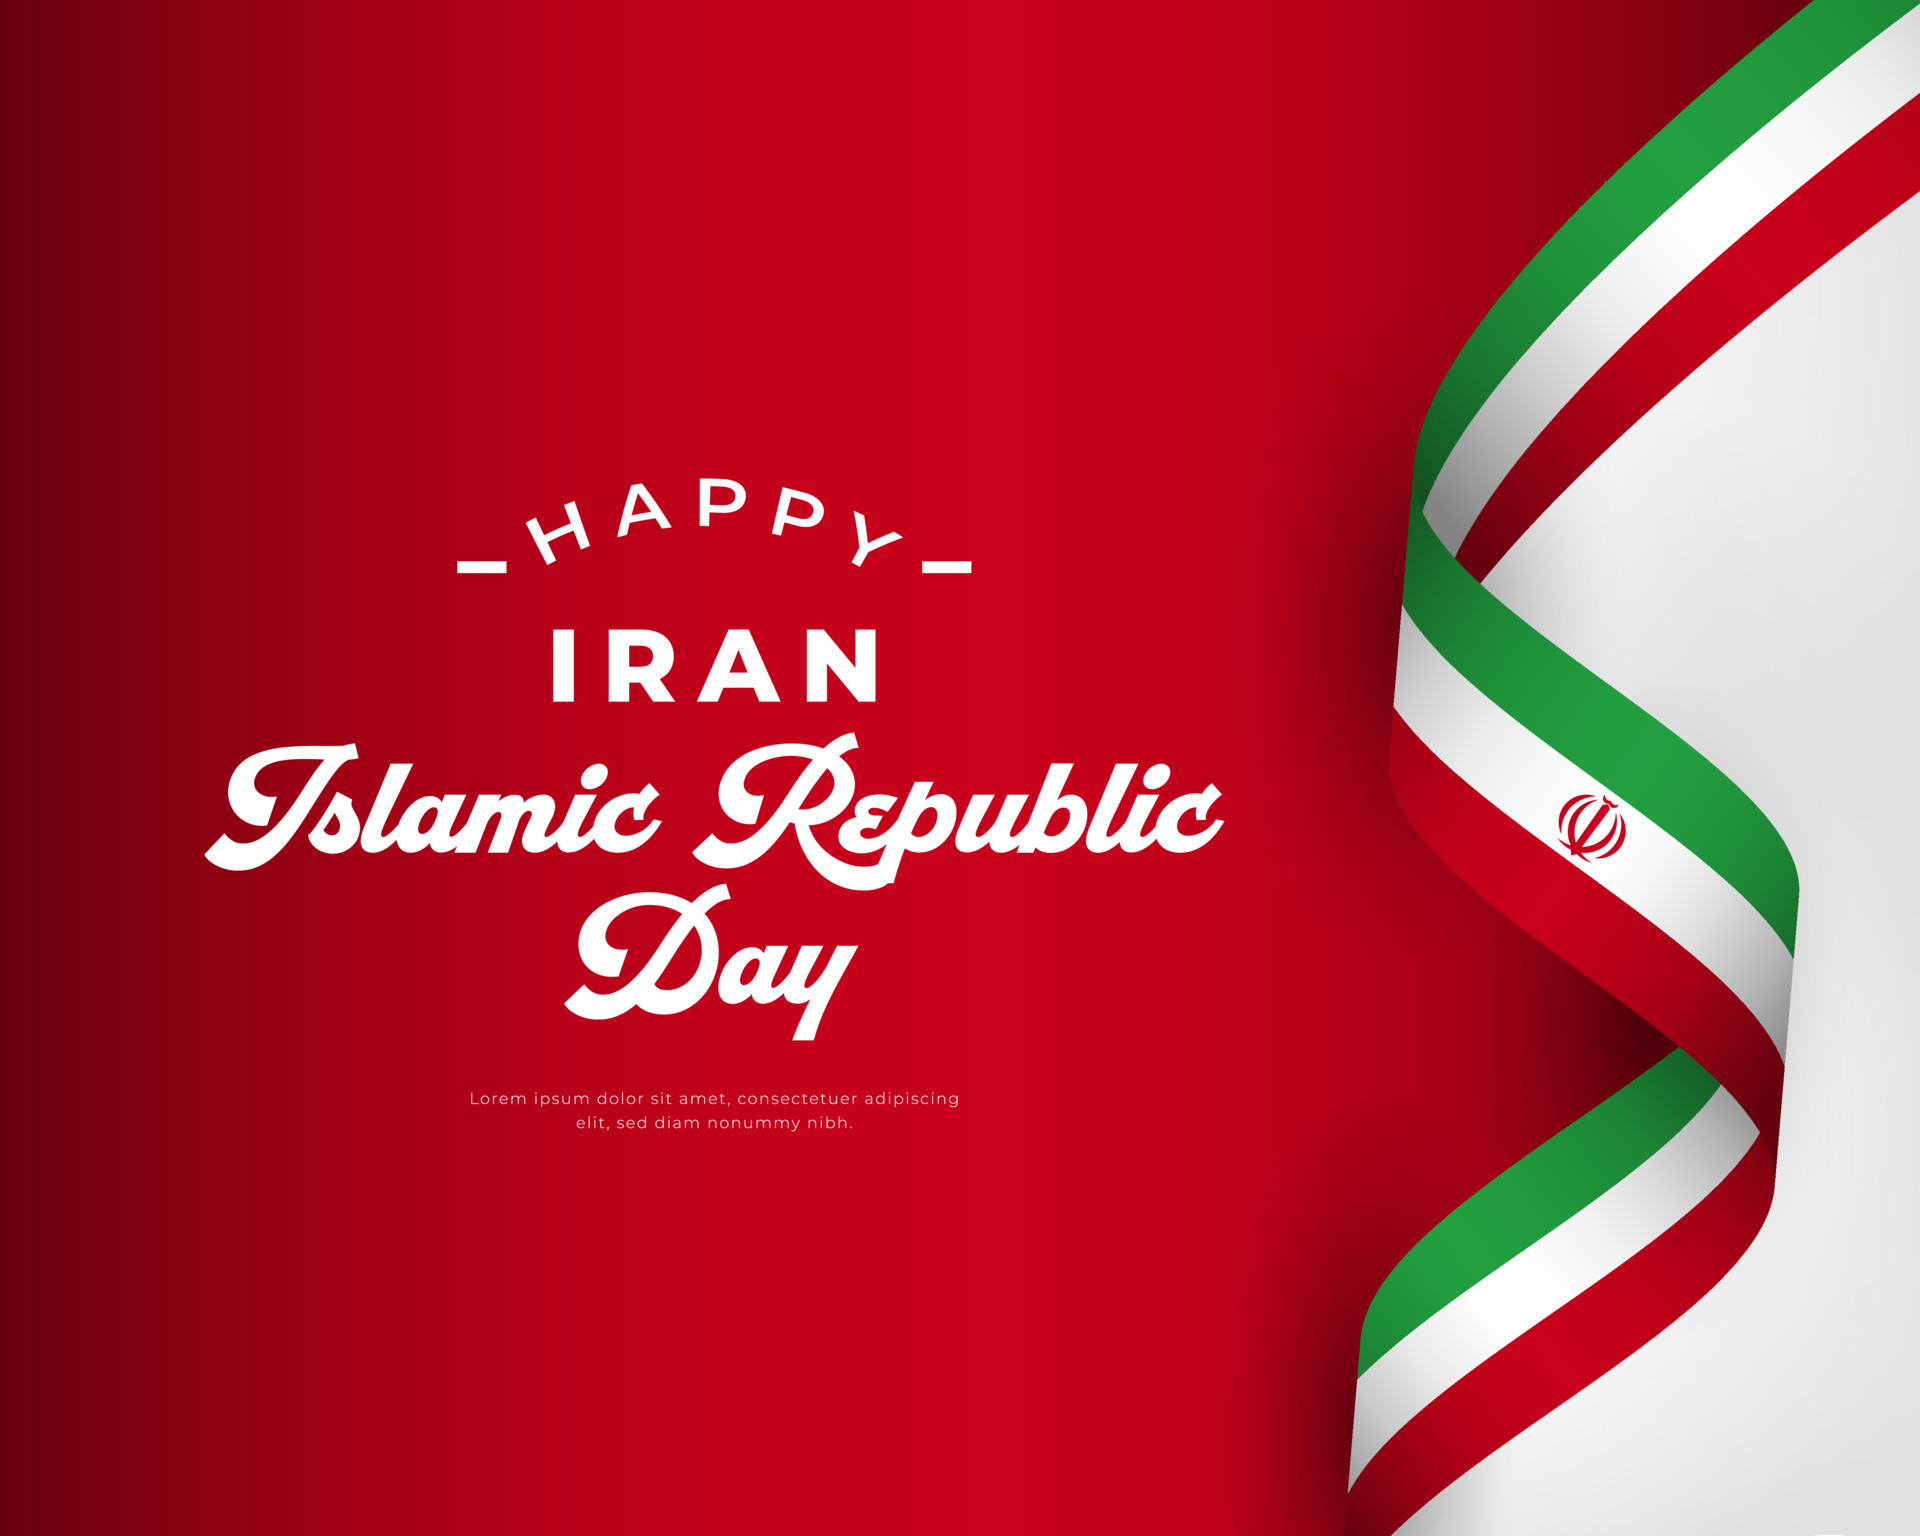 Iran Marks Islamic Republic Day